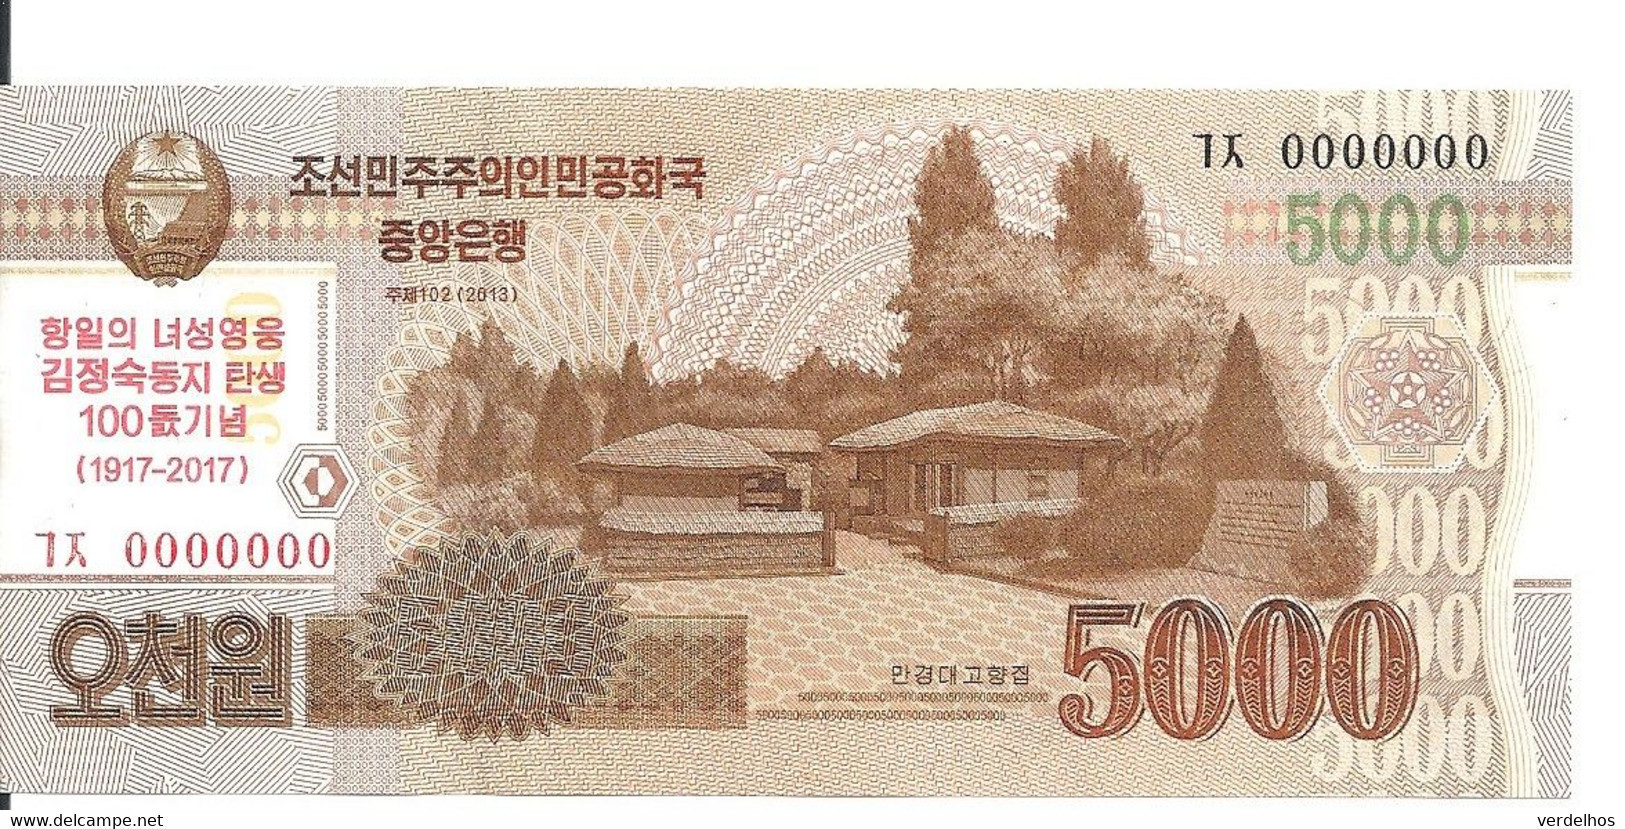 COREE DU NORD 5000 WON 2013(2017) UNC P CS18 - Korea, North